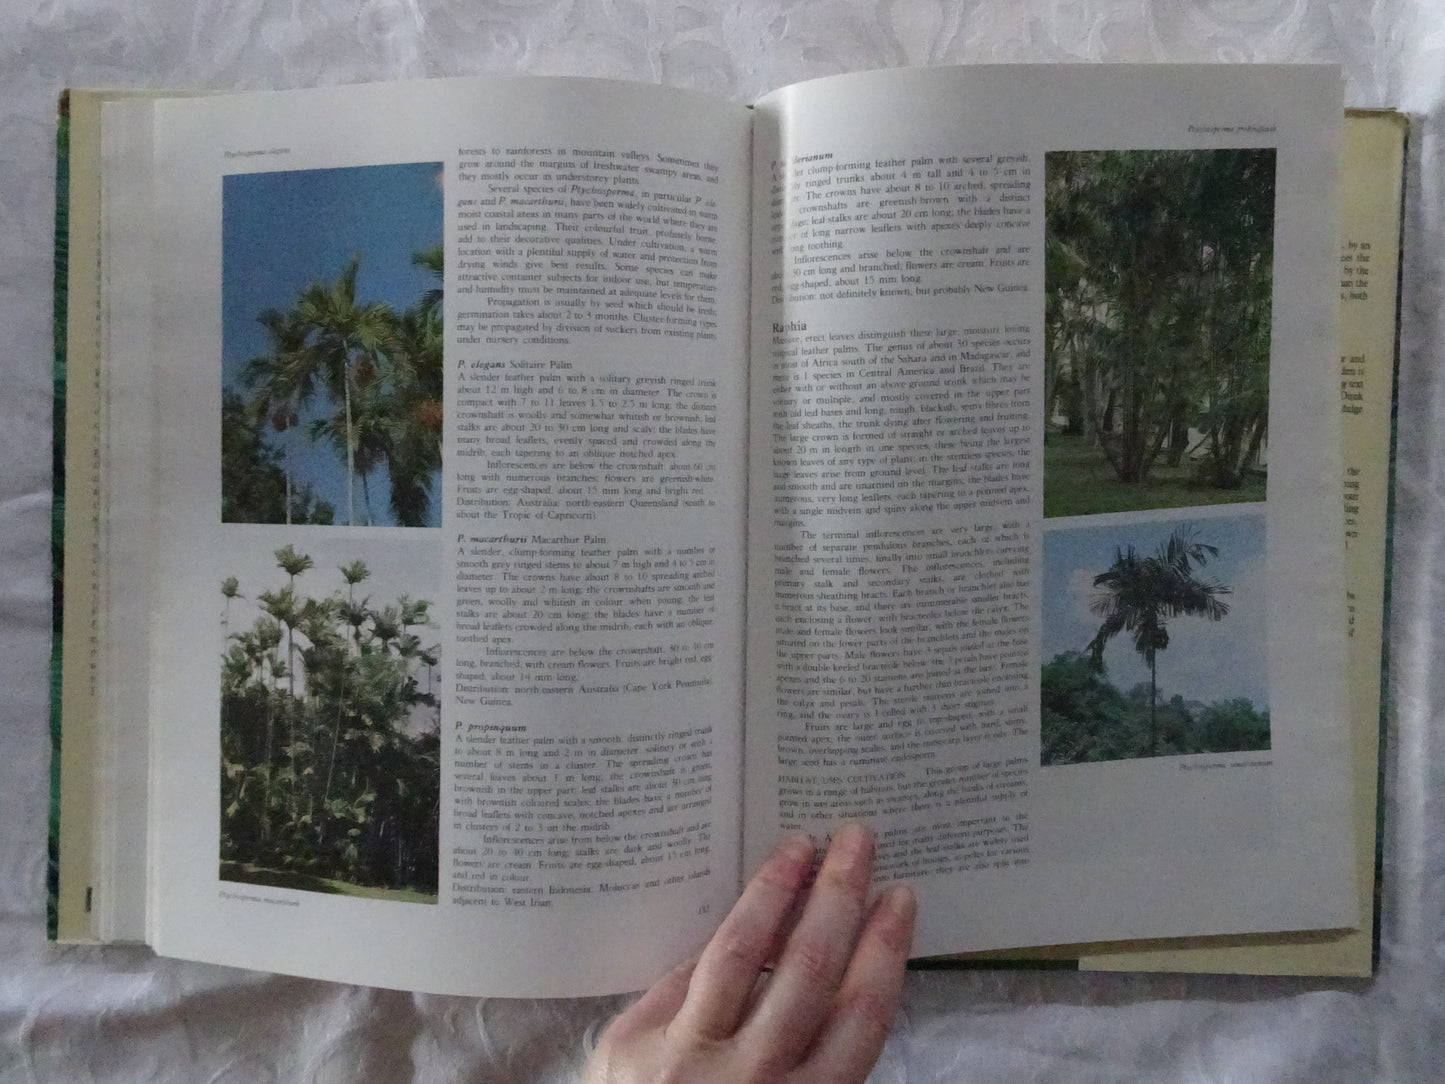 Palms of the World by Alec Blombery & Tony Rodd